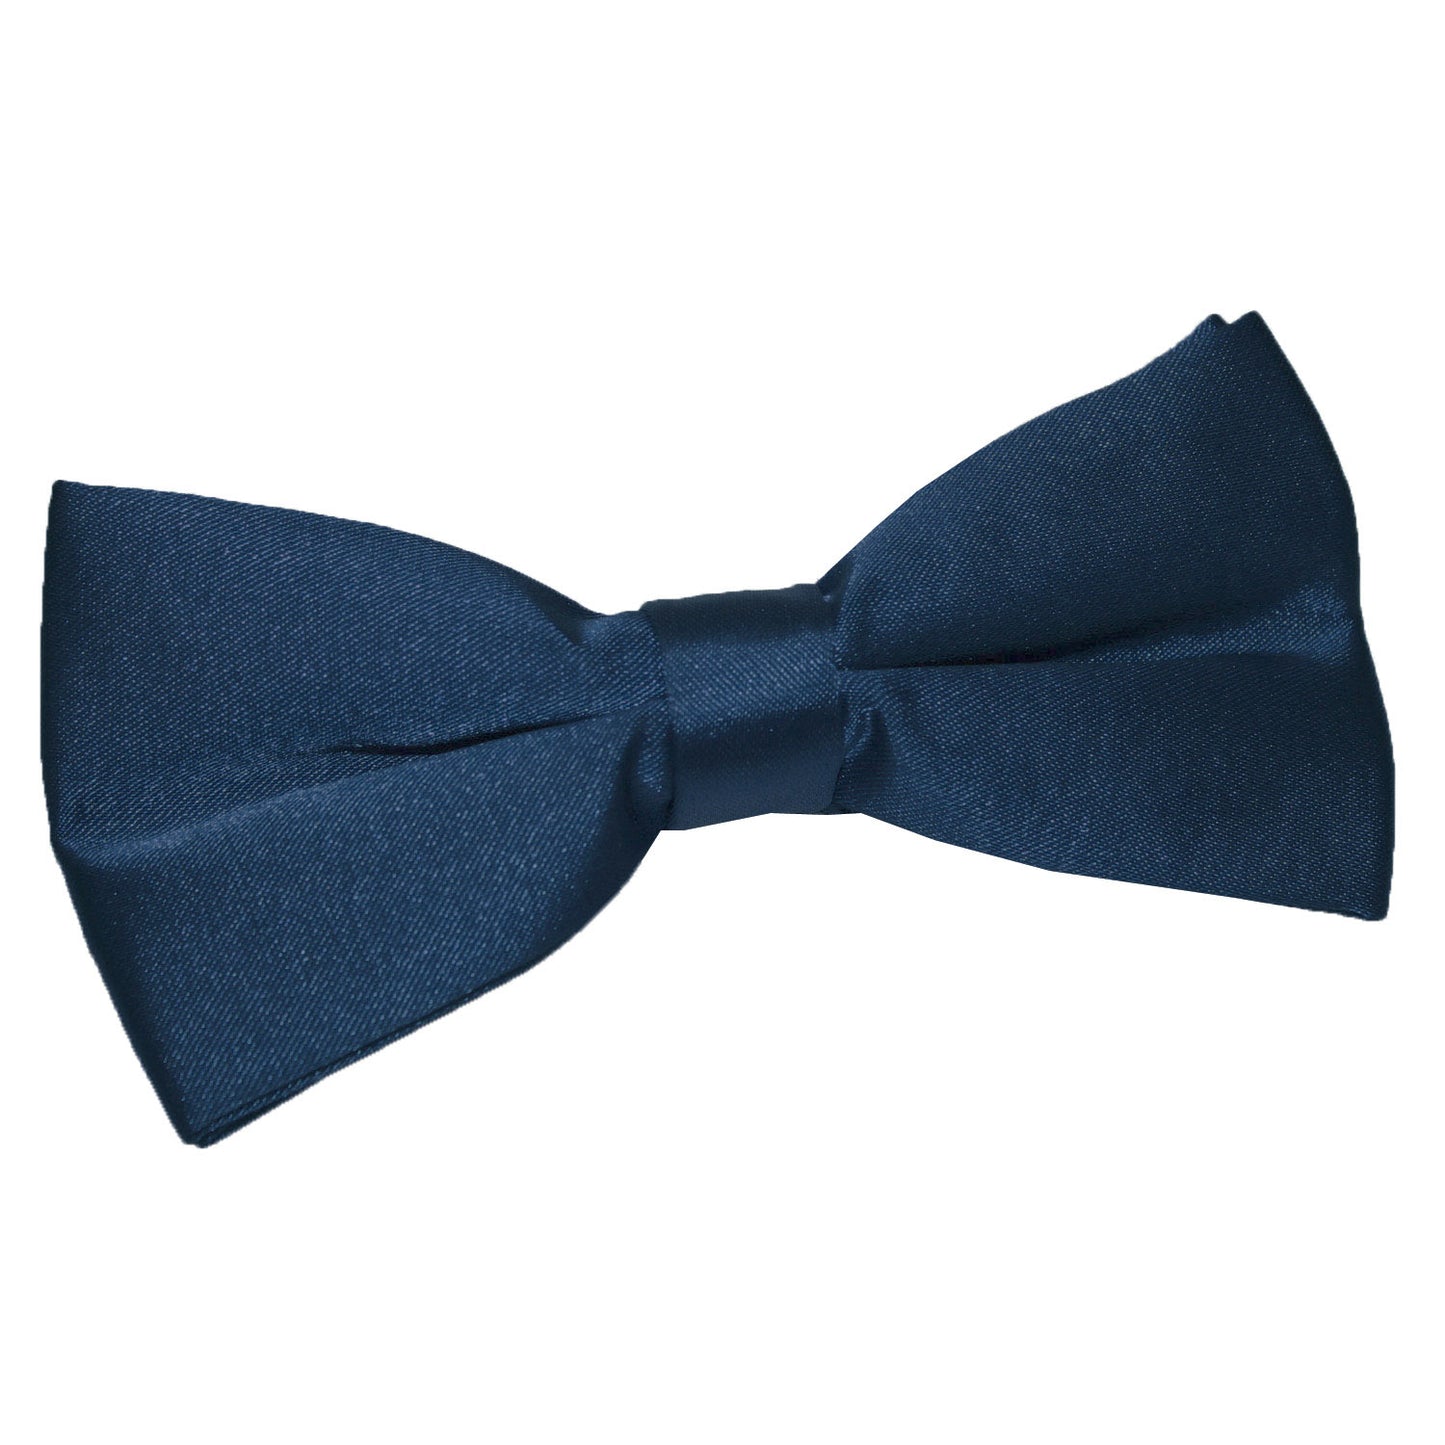 Plain Satin Pre-Tied Bow Tie - Navy Blue